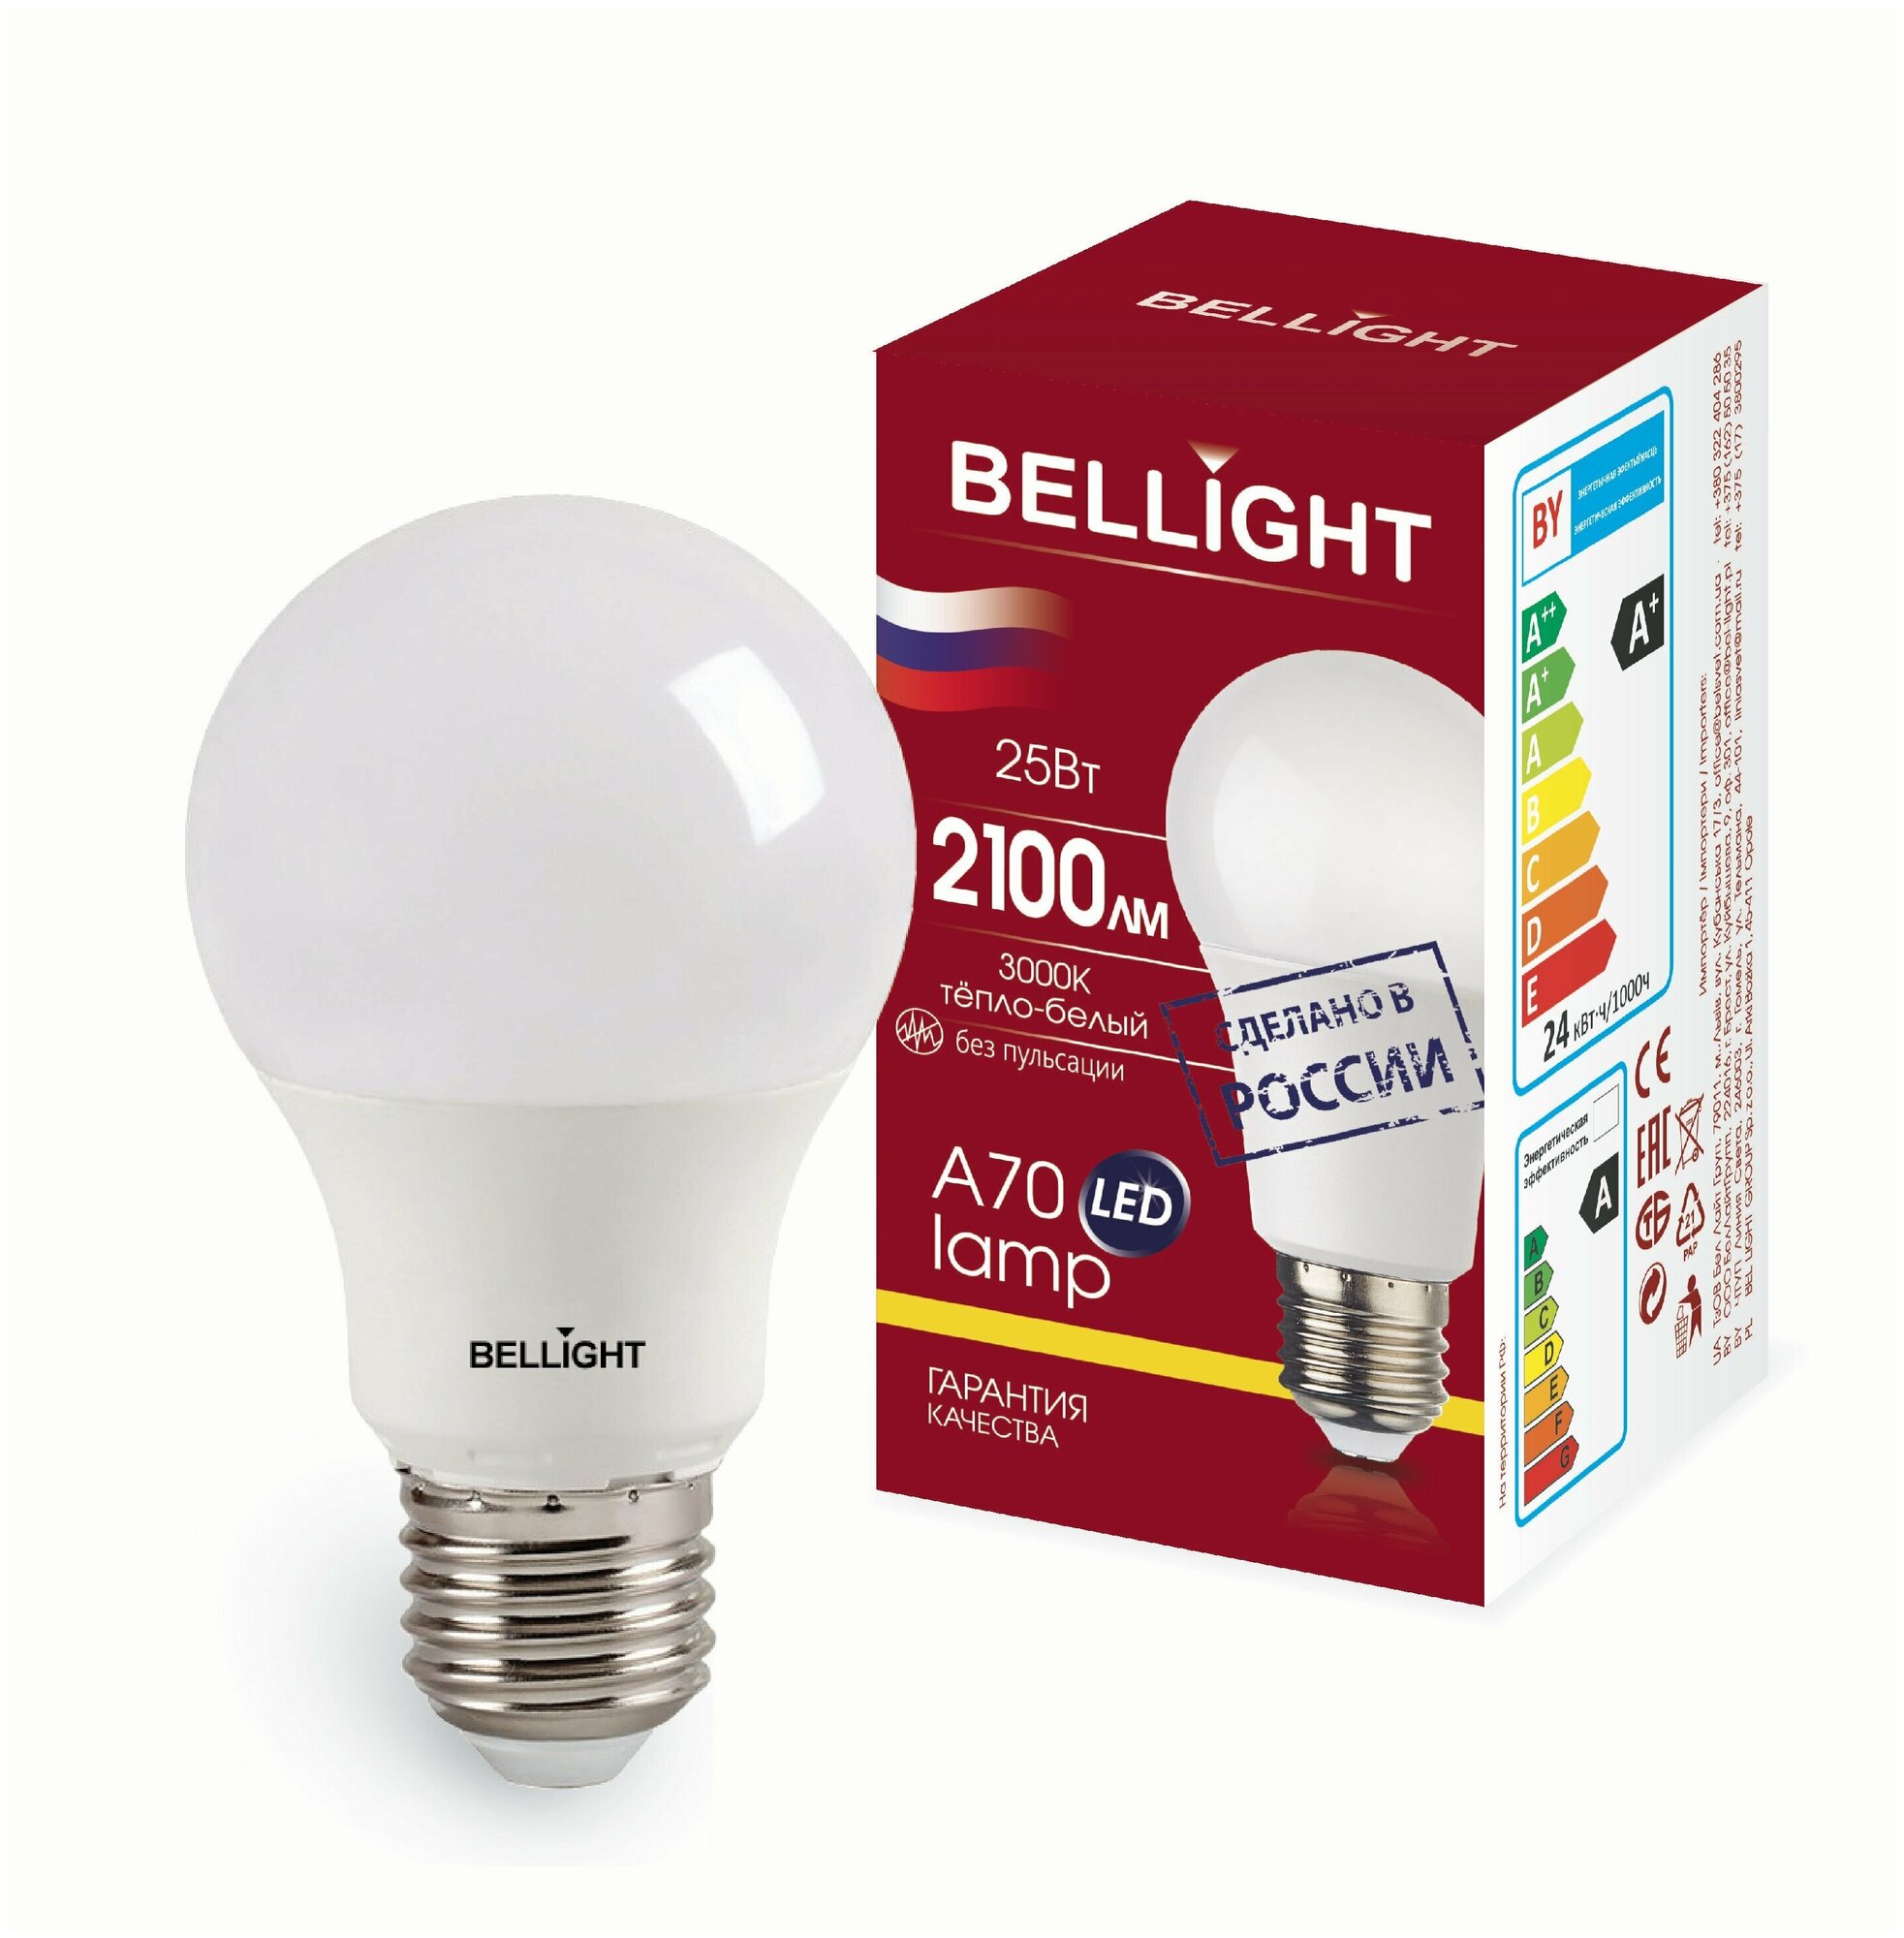 Лампа Bellight A70 220V/25W/E27 2100Lm 3000К светодиодная,2шт